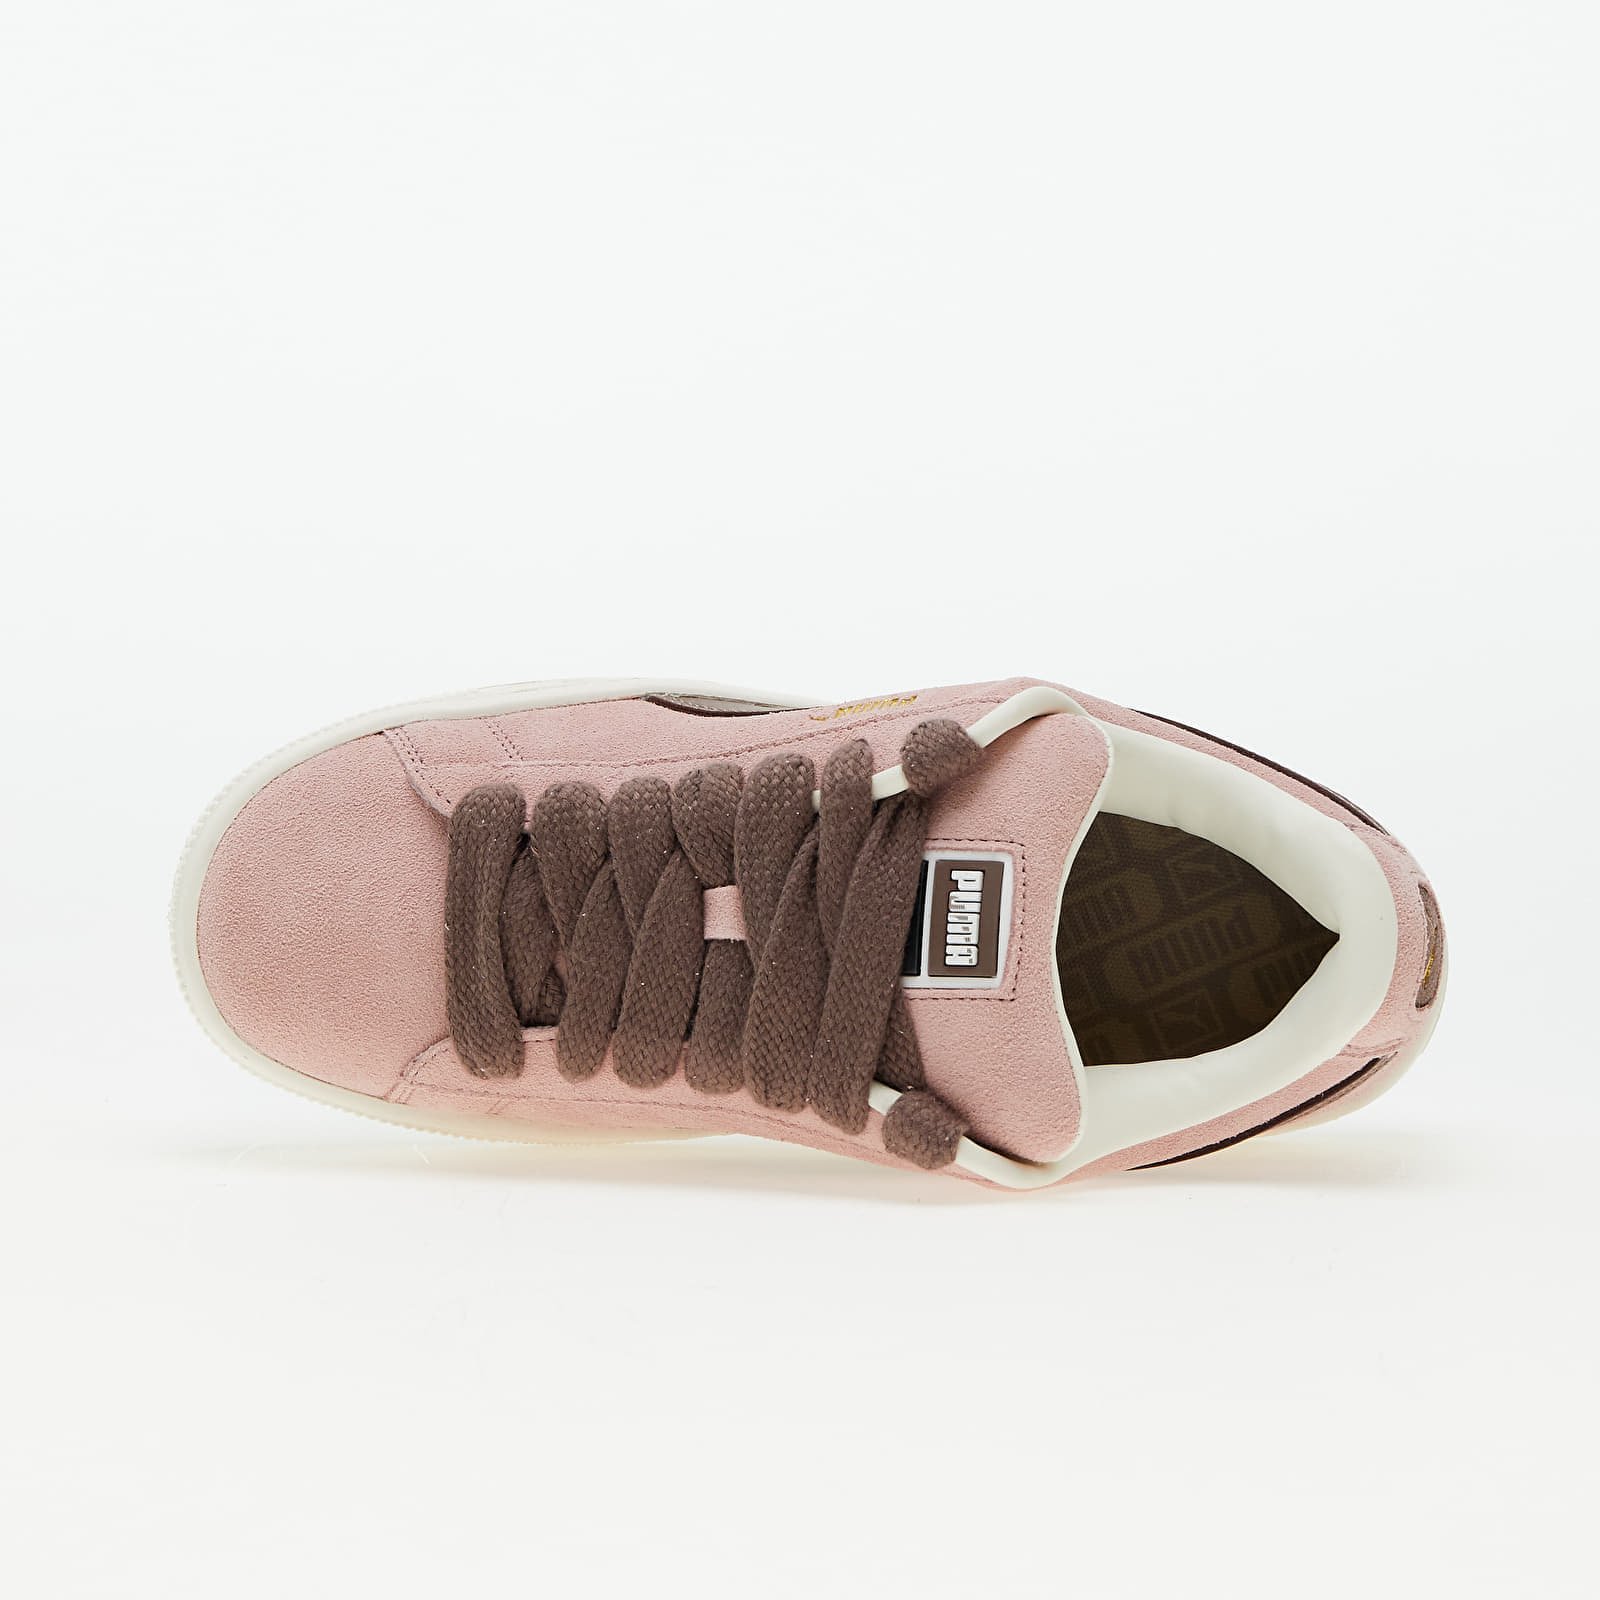 Suede Xl Pink, Low-top sneakers